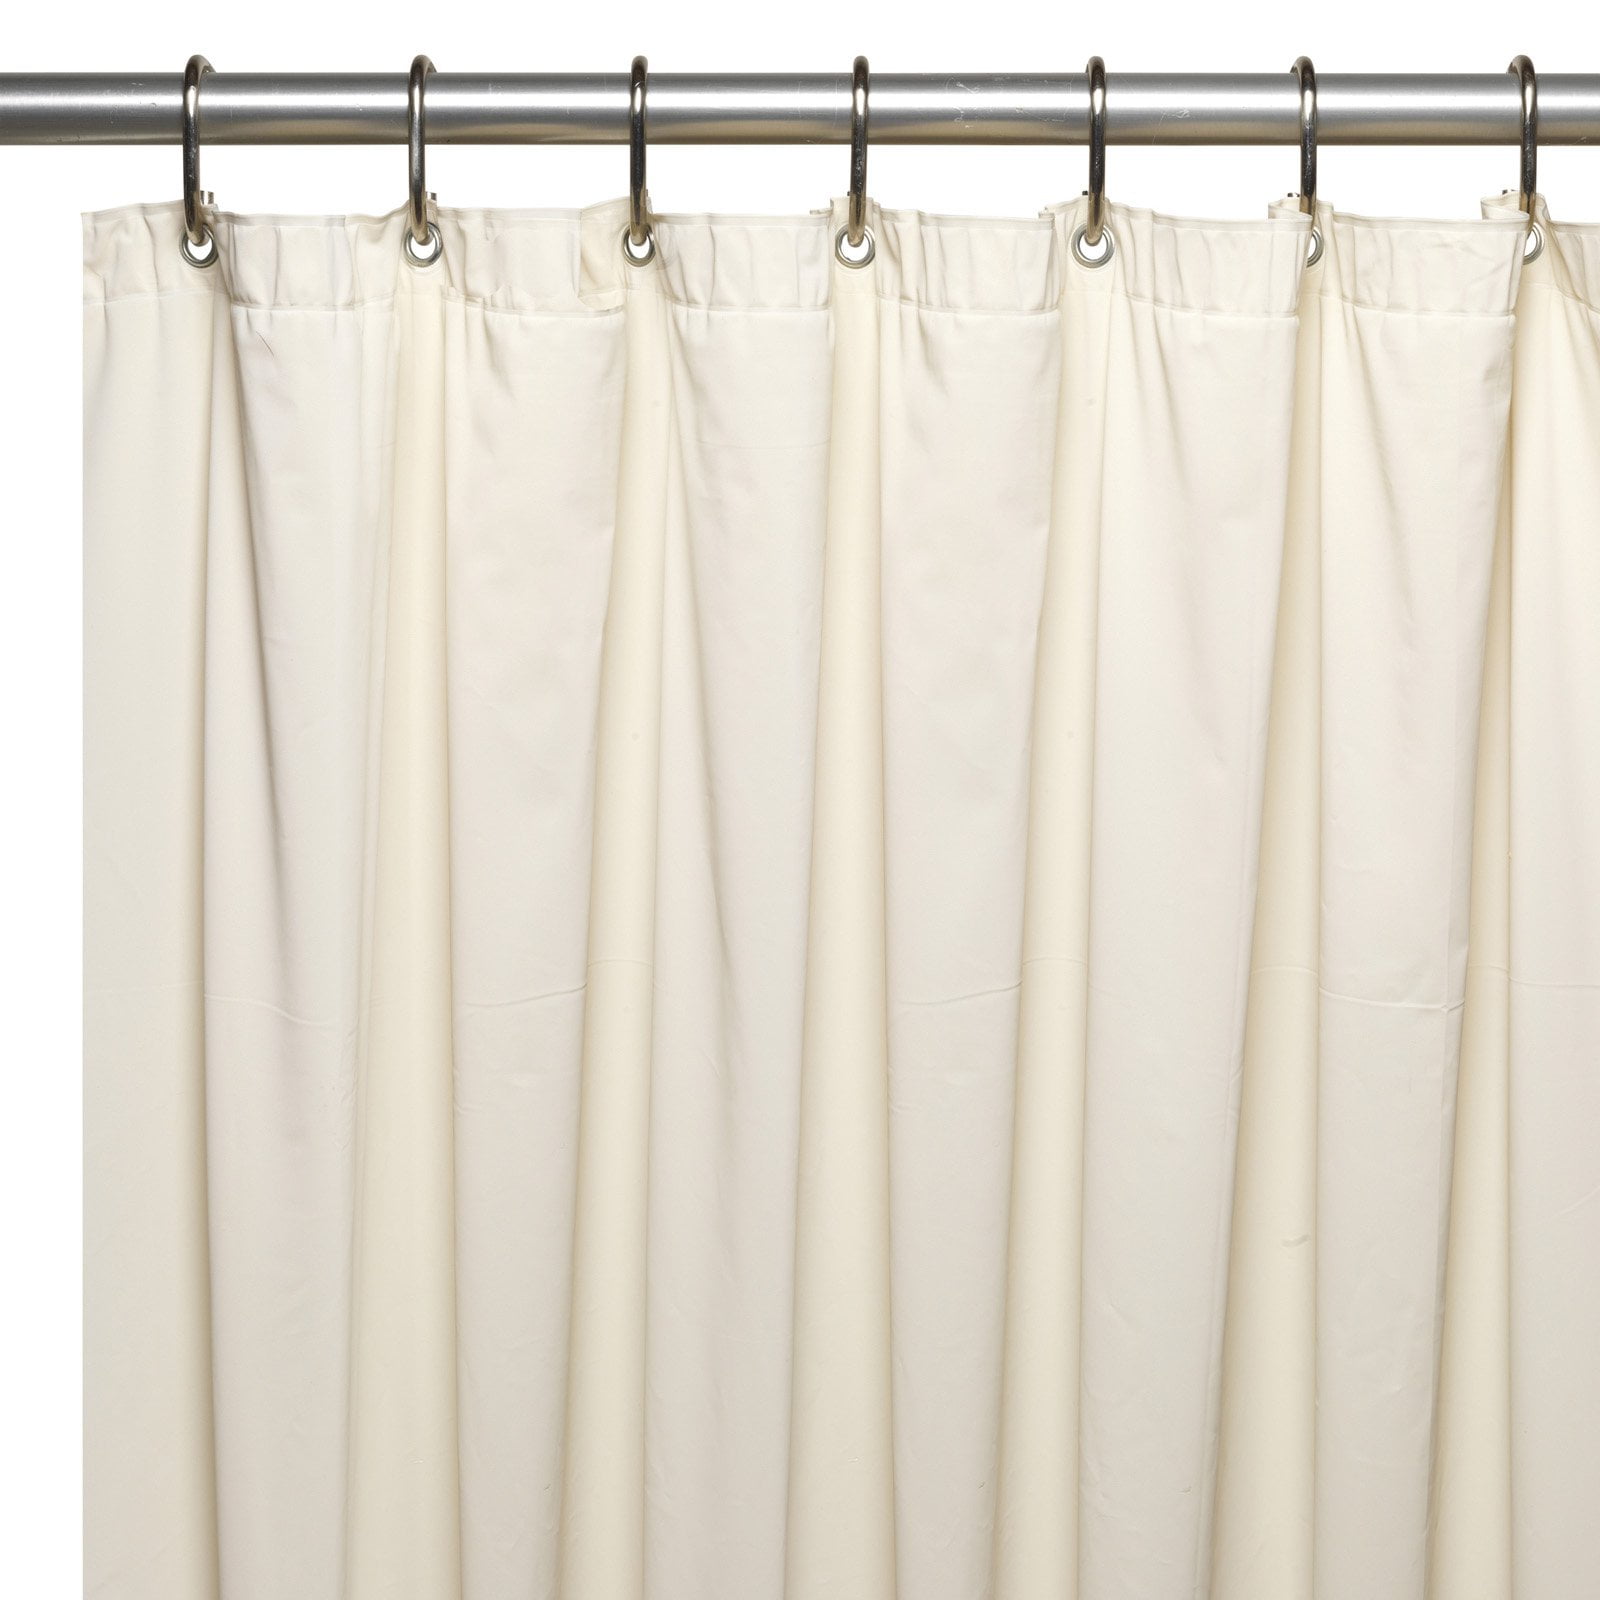 10 Gauge Vinyl Shower Curtain Liner, Shower Stall Curtain Liner 54 X 72